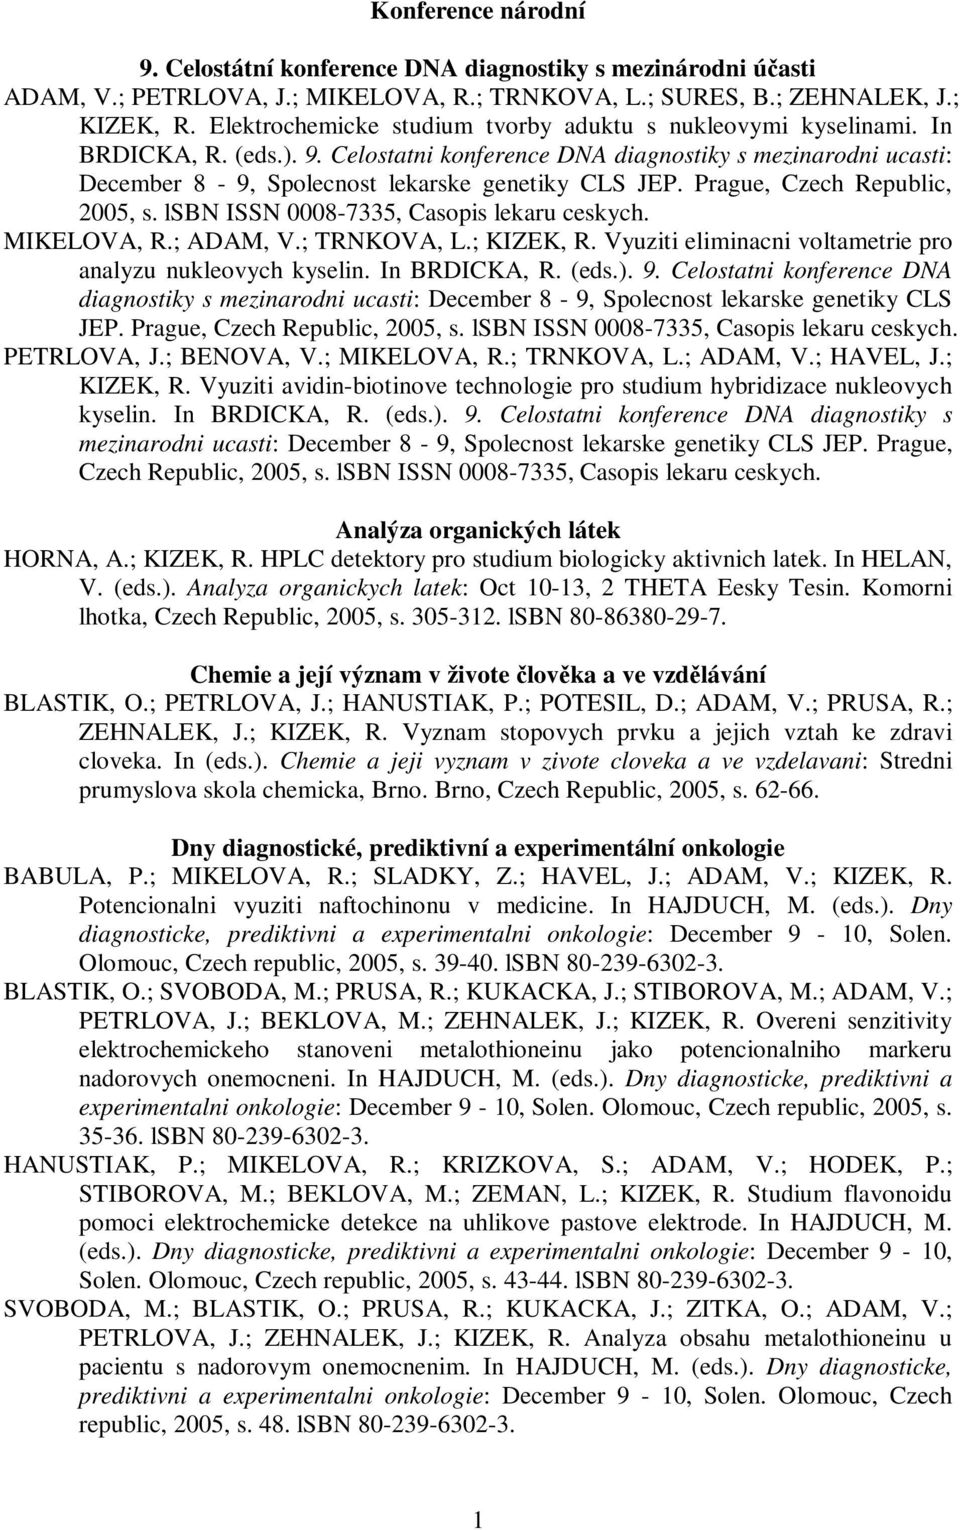 Prague, Czech Republic, 2005, s. lsbn ISSN 0008-7335, Casopis lekaru ceskych. MIKELOVA, R.; ADAM, V.; TRNKOVA, L.; KIZEK, R. Vyuziti eliminacni voltametrie pro analyzu nukleovych kyselin.